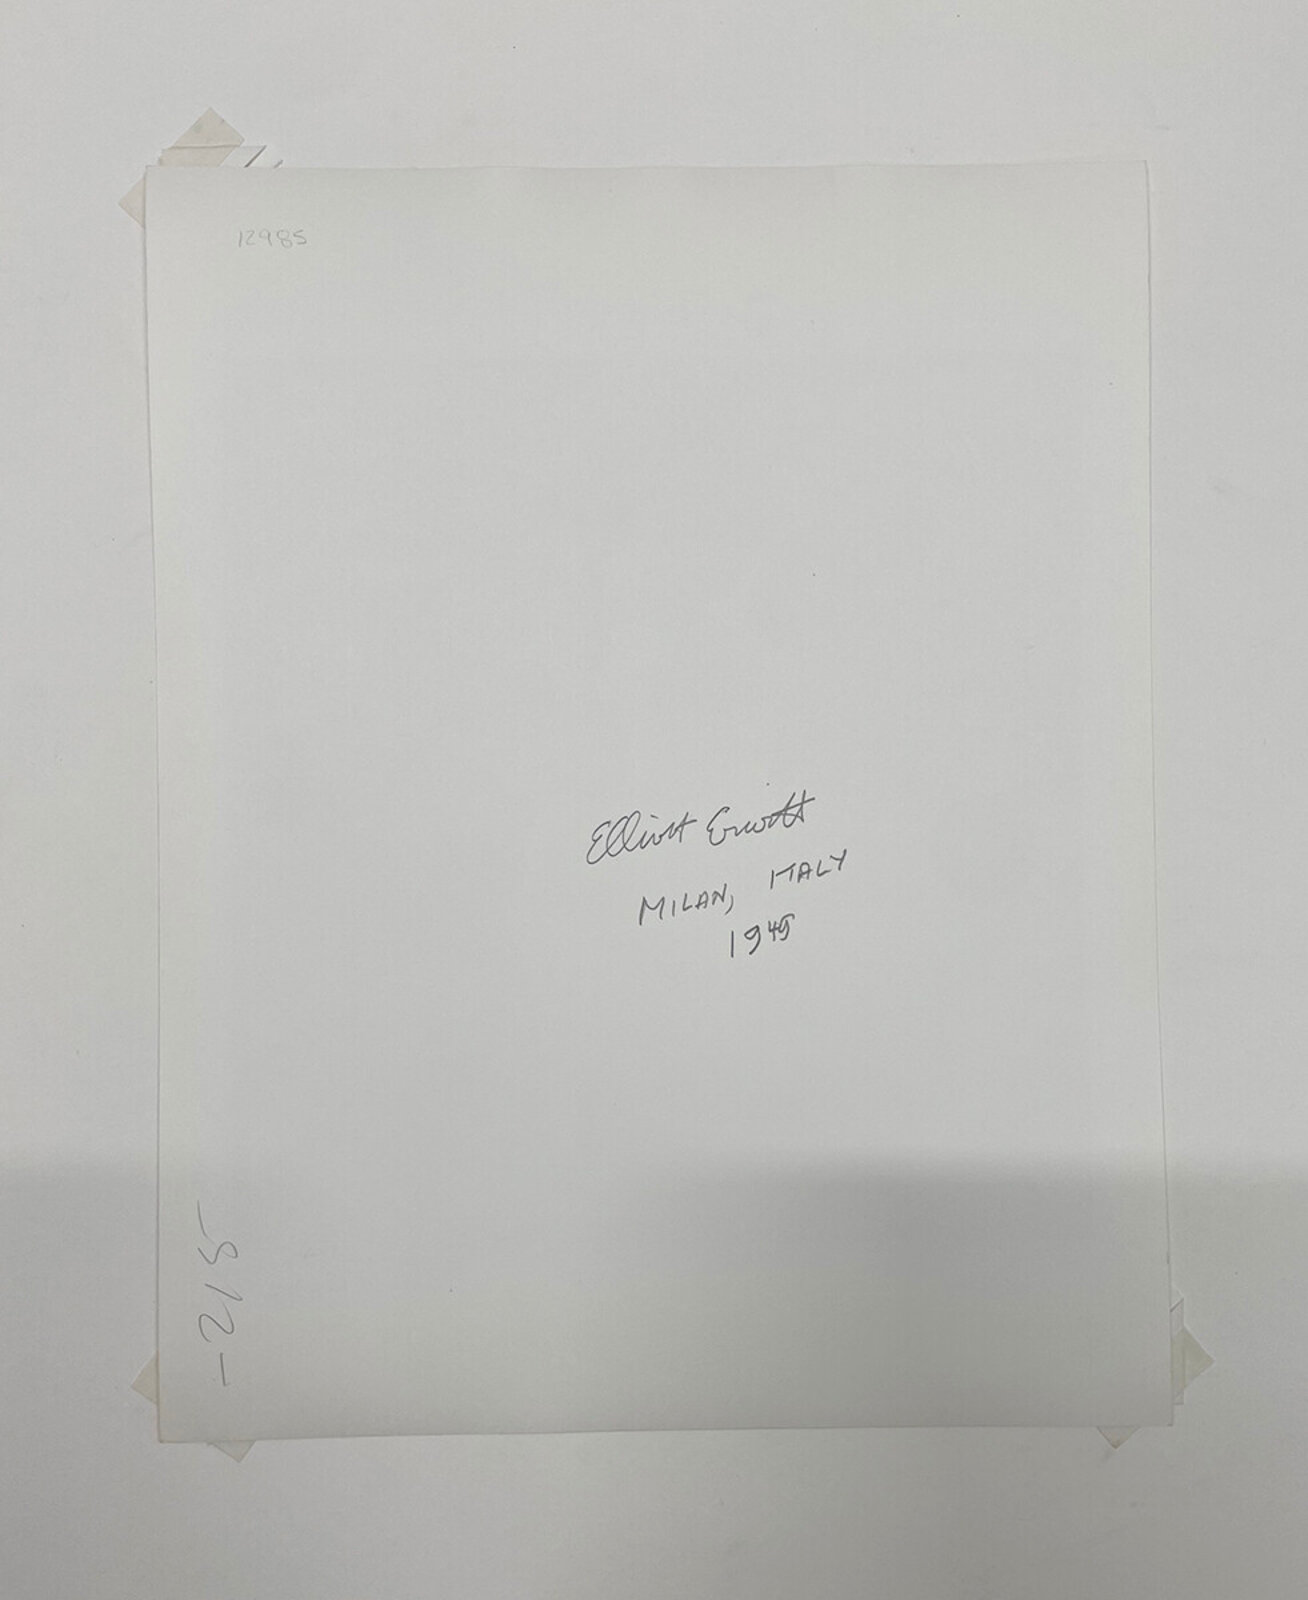 Elliott Erwitt | Milan, Italy (1949) | Available for Sale | Artsy